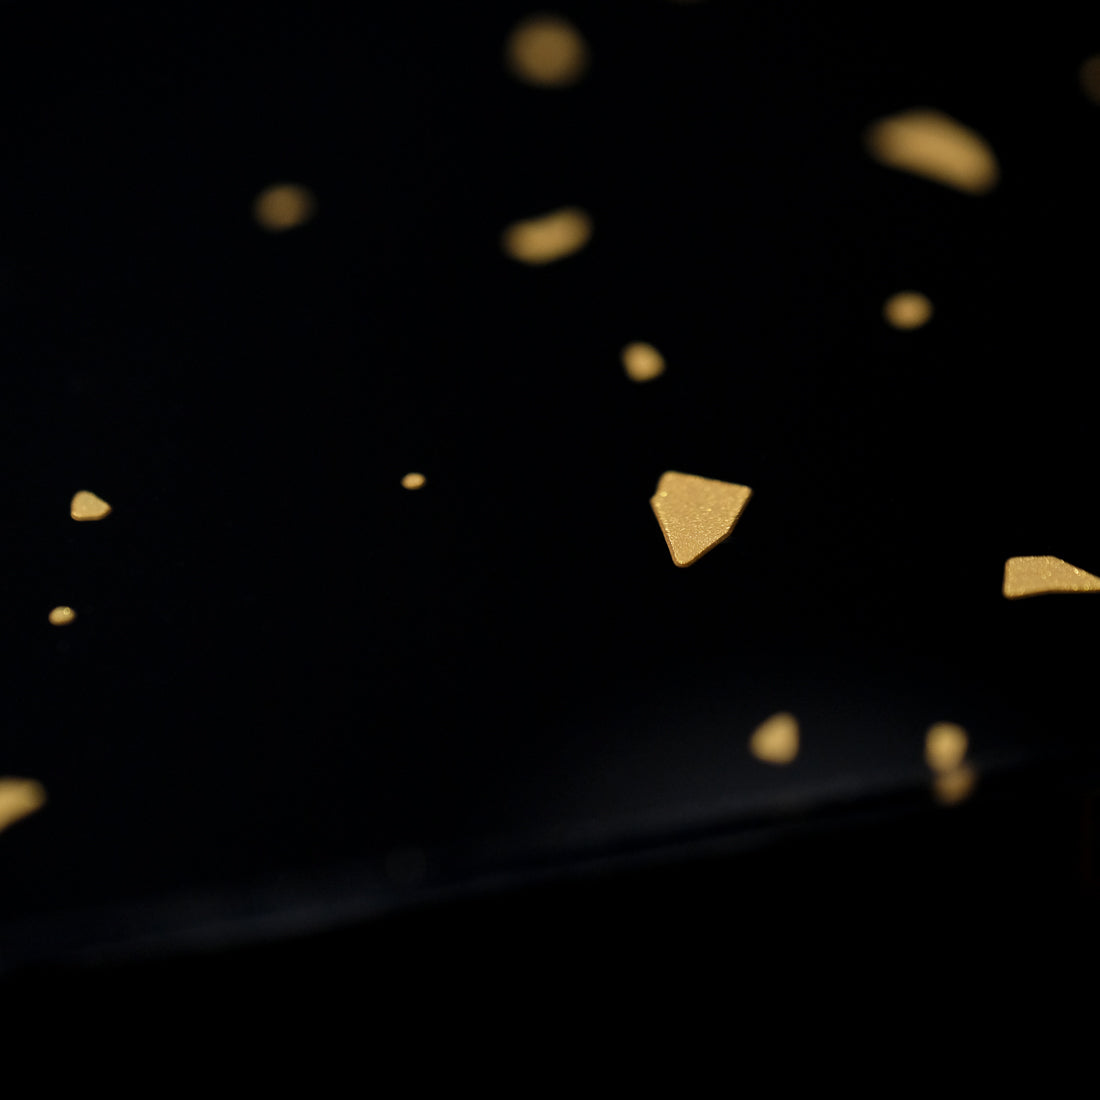 Speckled - Stratocaster Trem Cover - Gold on Black Plexi